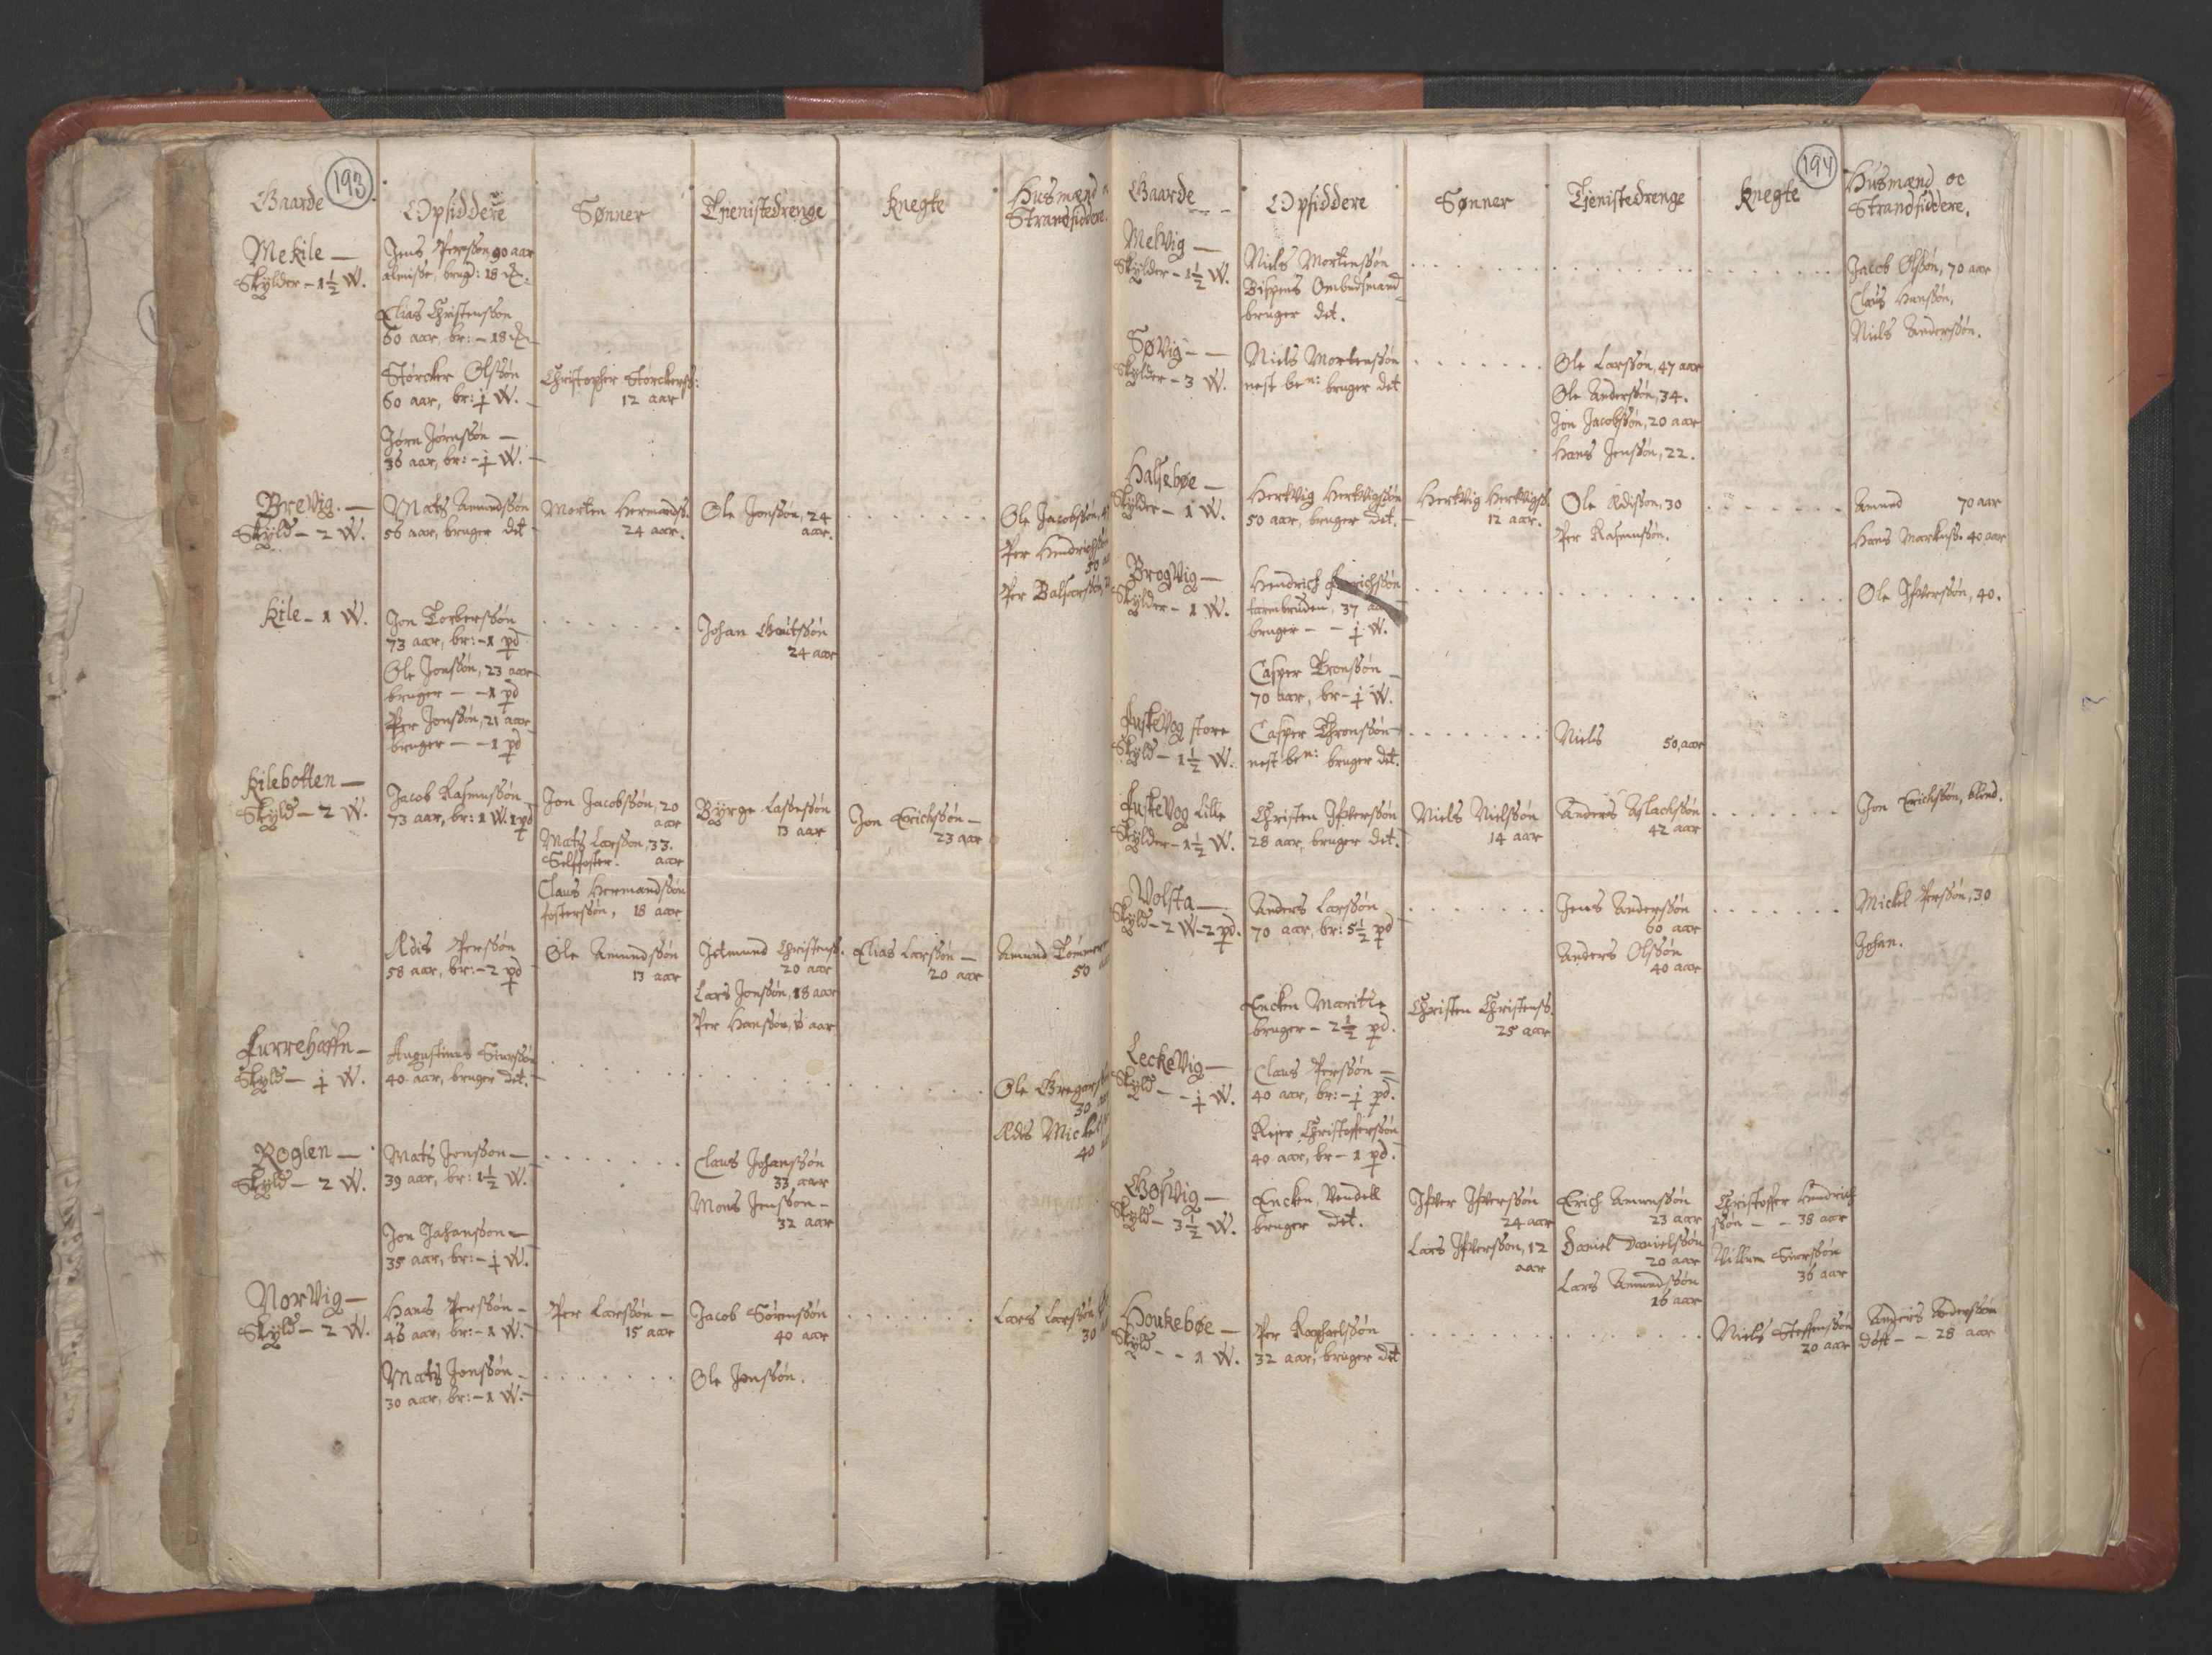 RA, Vicar's Census 1664-1666, no. 36: Lofoten and Vesterålen deanery, Senja deanery and Troms deanery, 1664-1666, p. 193-194